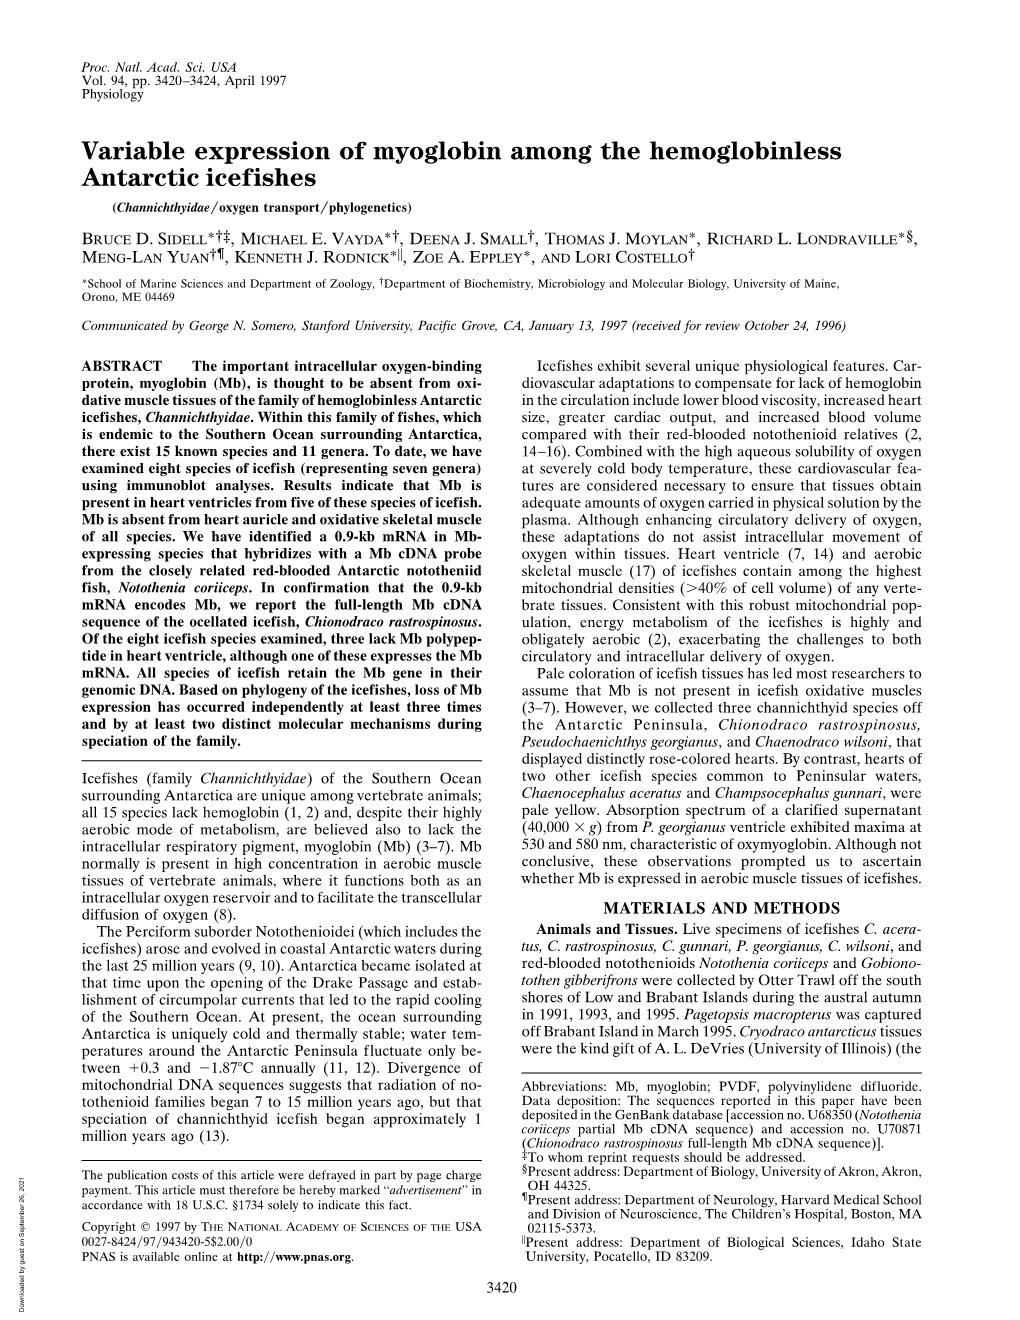 Variable Expression of Myoglobin Among the Hemoglobinless Antarctic Icefishes (Channichthyidae͞oxygen Transport͞phylogenetics)